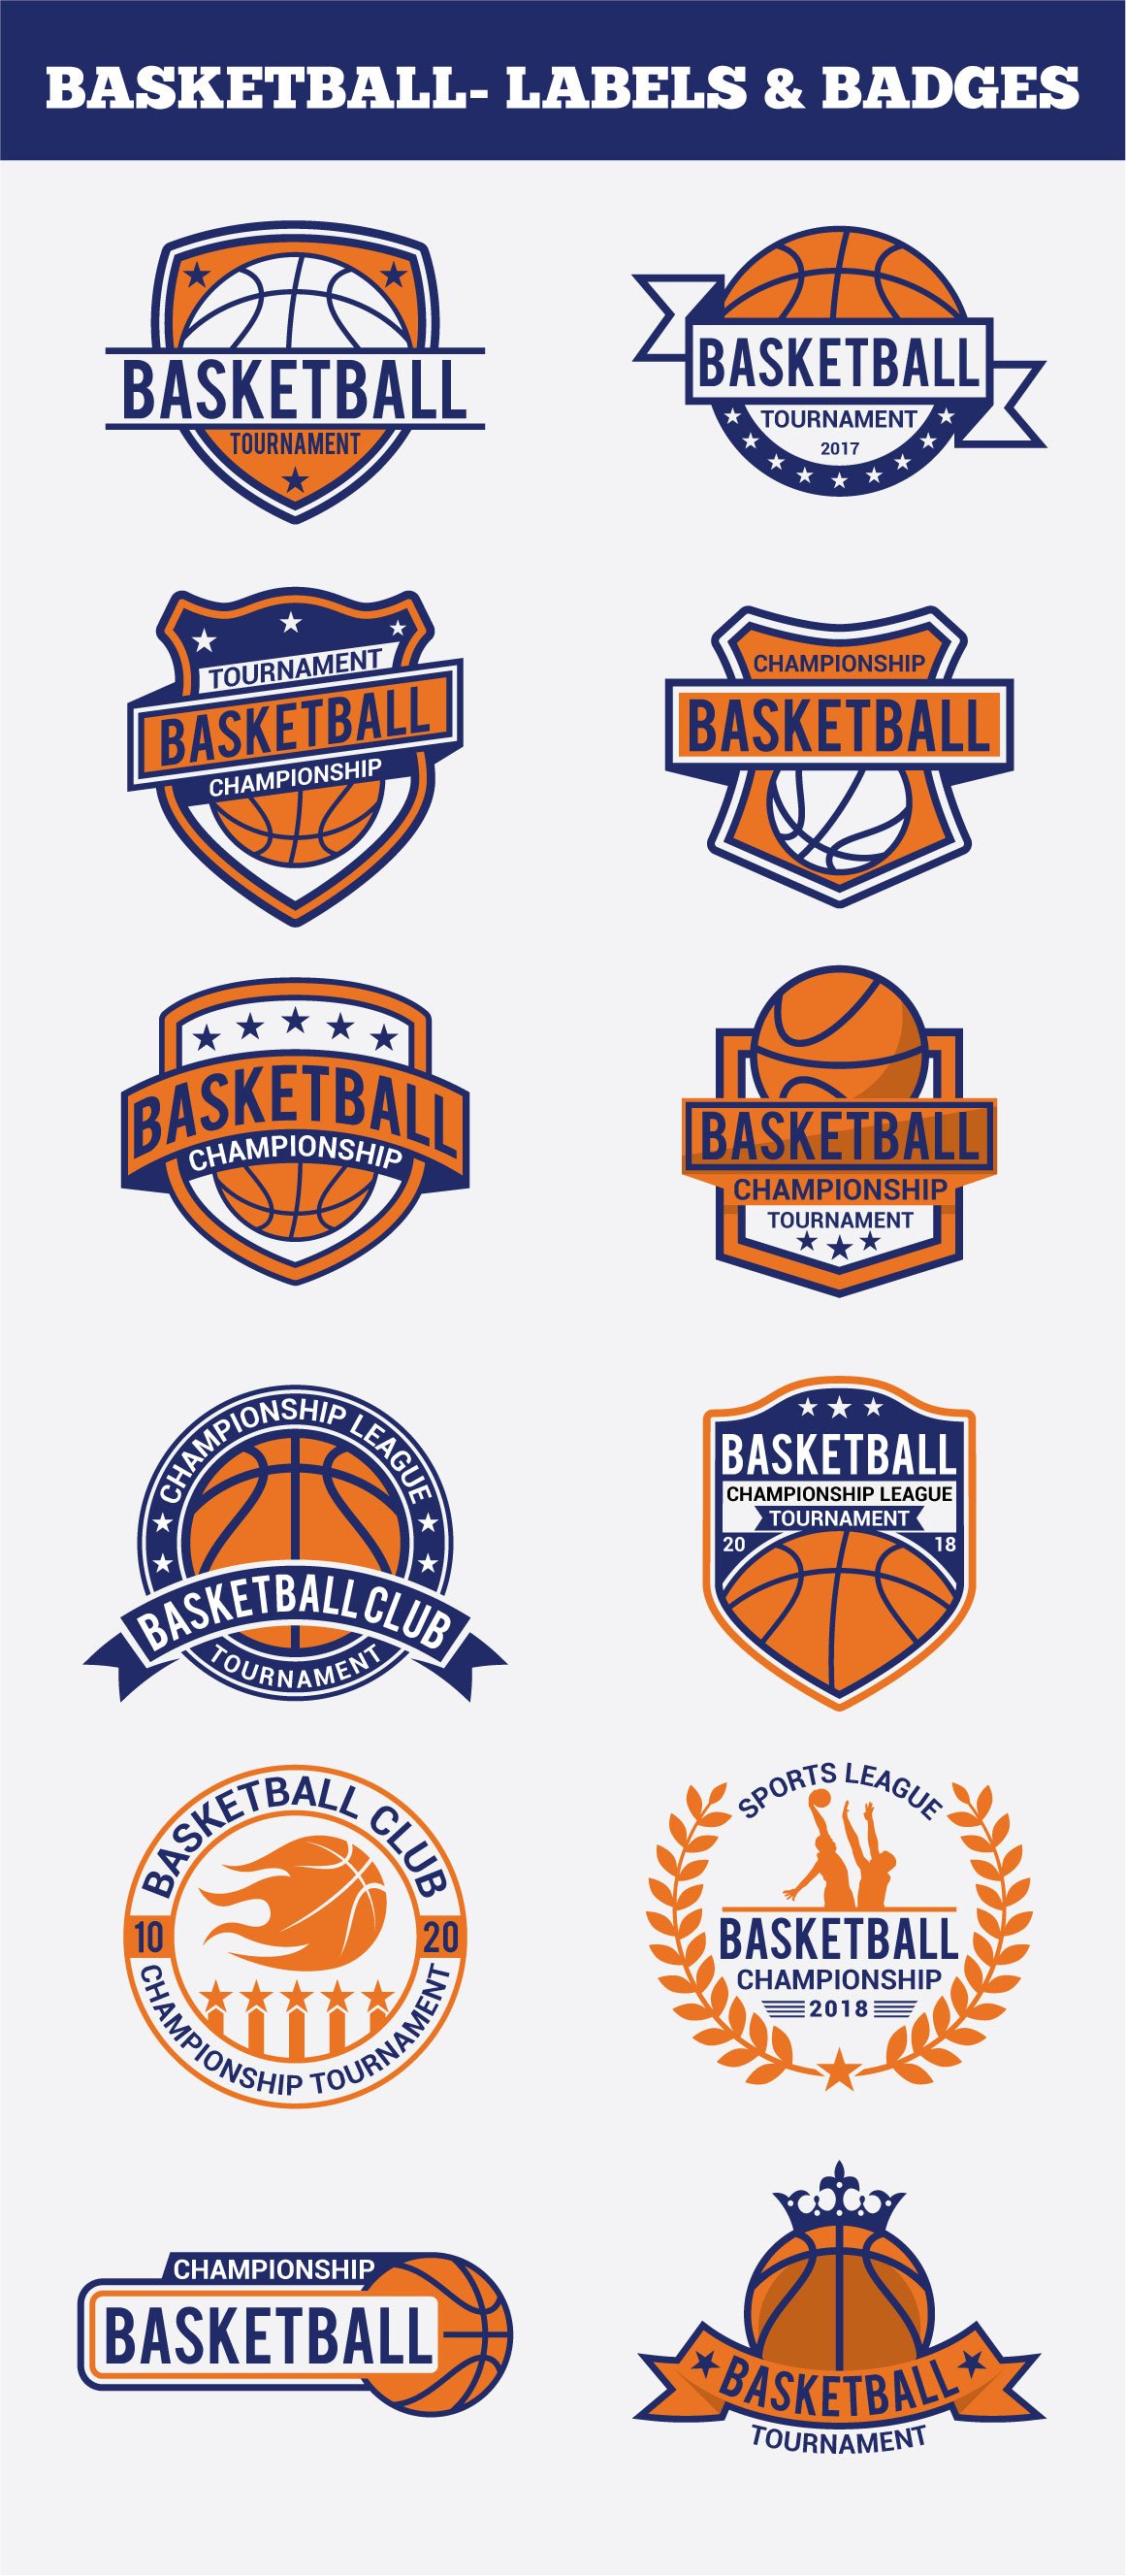 White background with basketball logos.